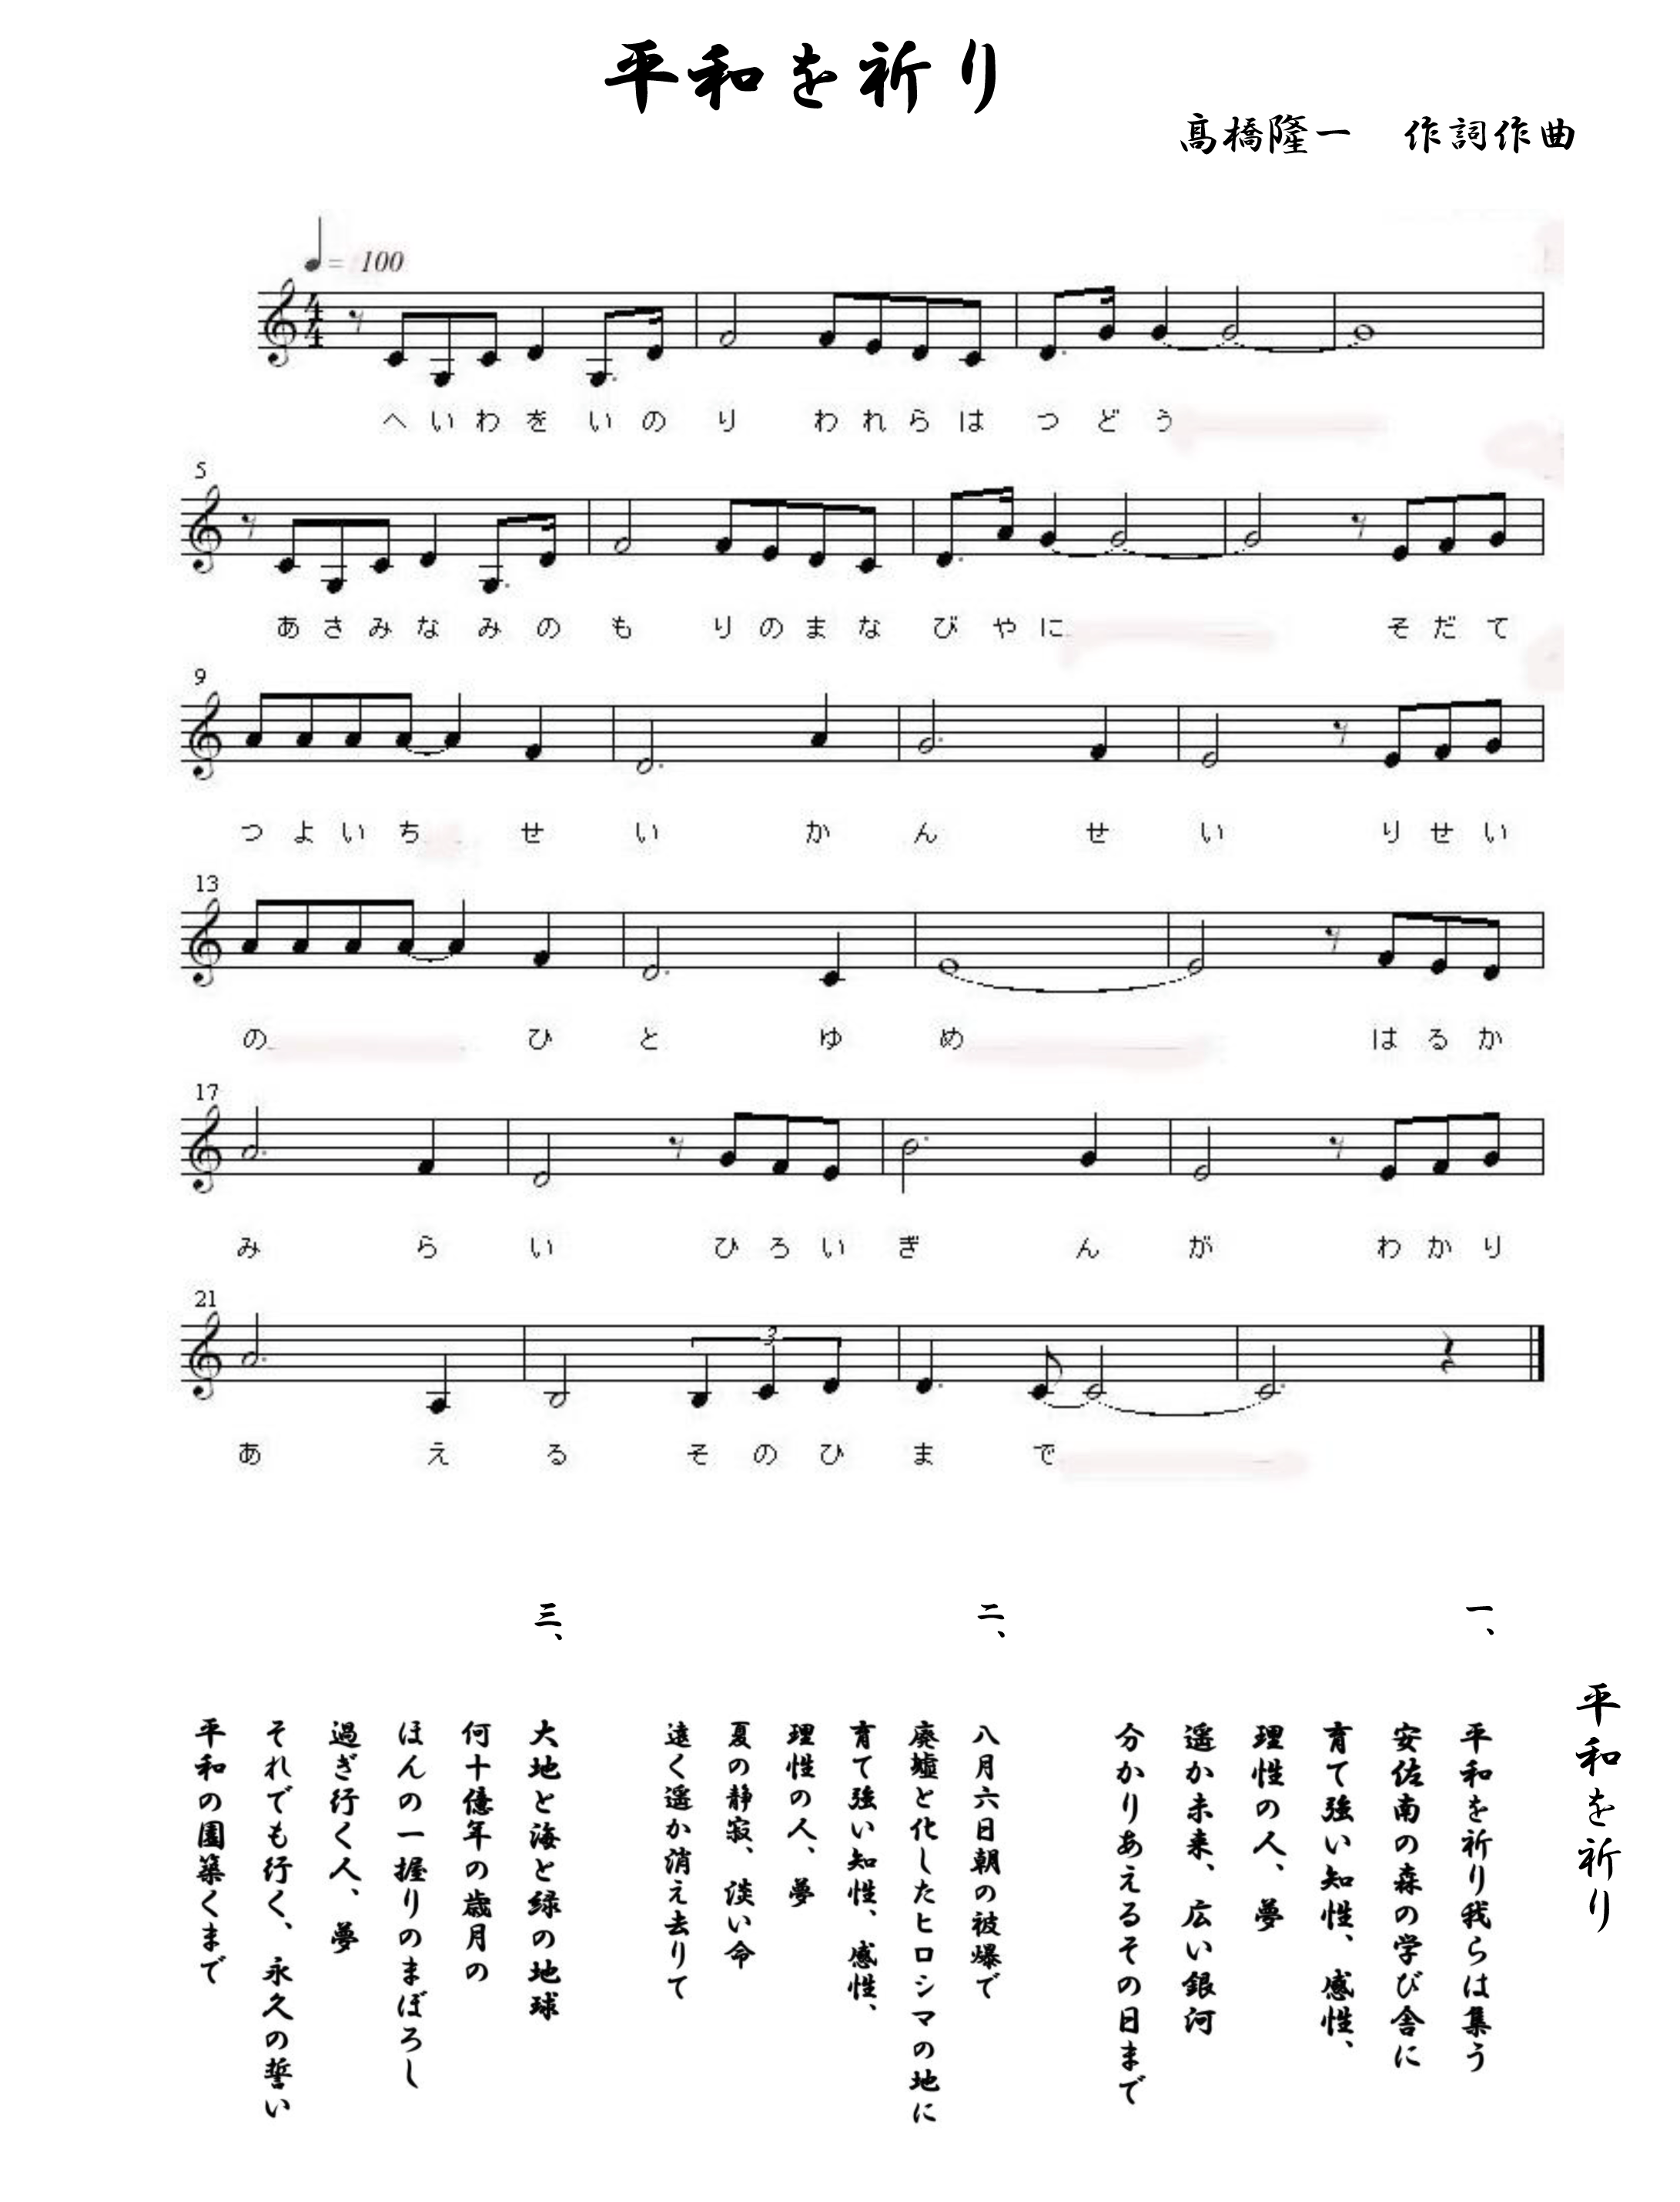 広島市立大学学歌応募作品 平和を祈り の楽譜 歌詞 伴奏